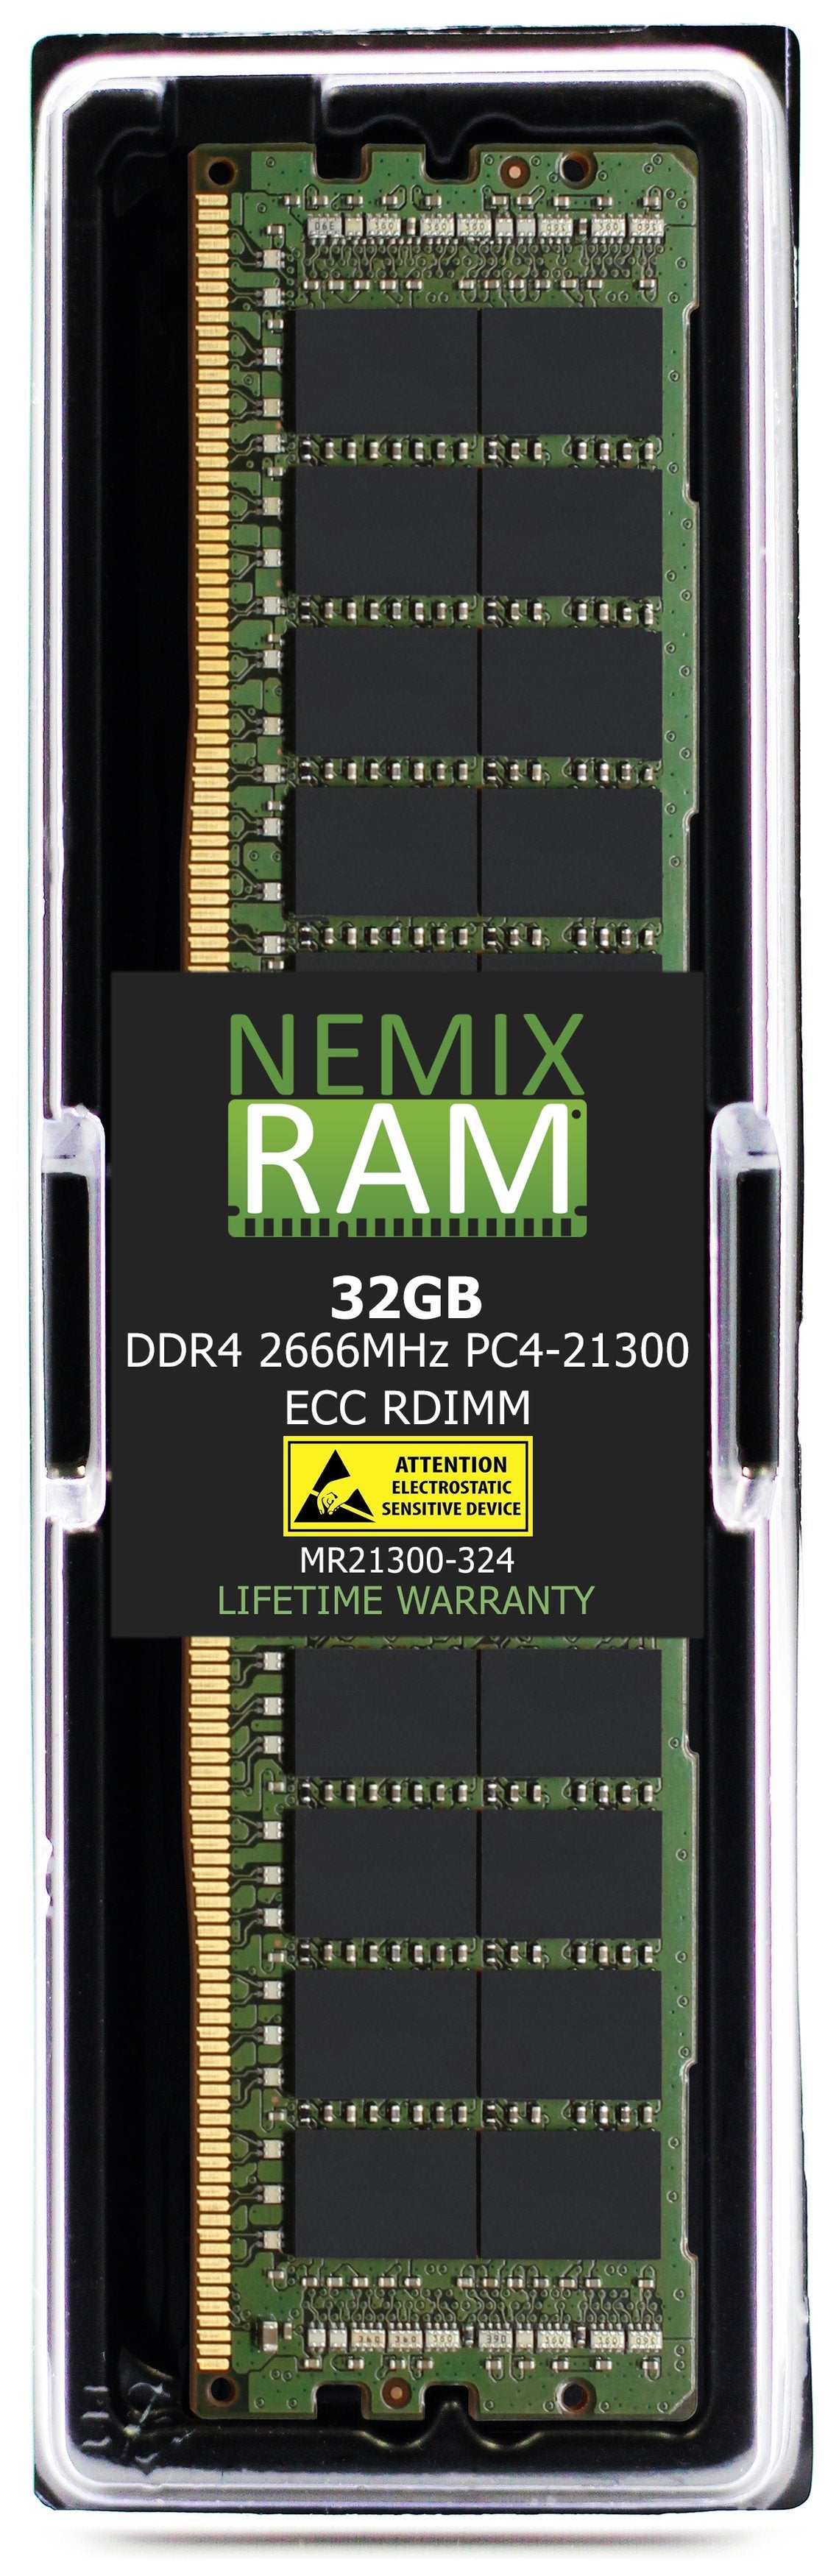 32GB DDR4 2666MHZ PC4-21300 RDIMM Compatible with Supermicro MEM-DR425L-SL01-ER29